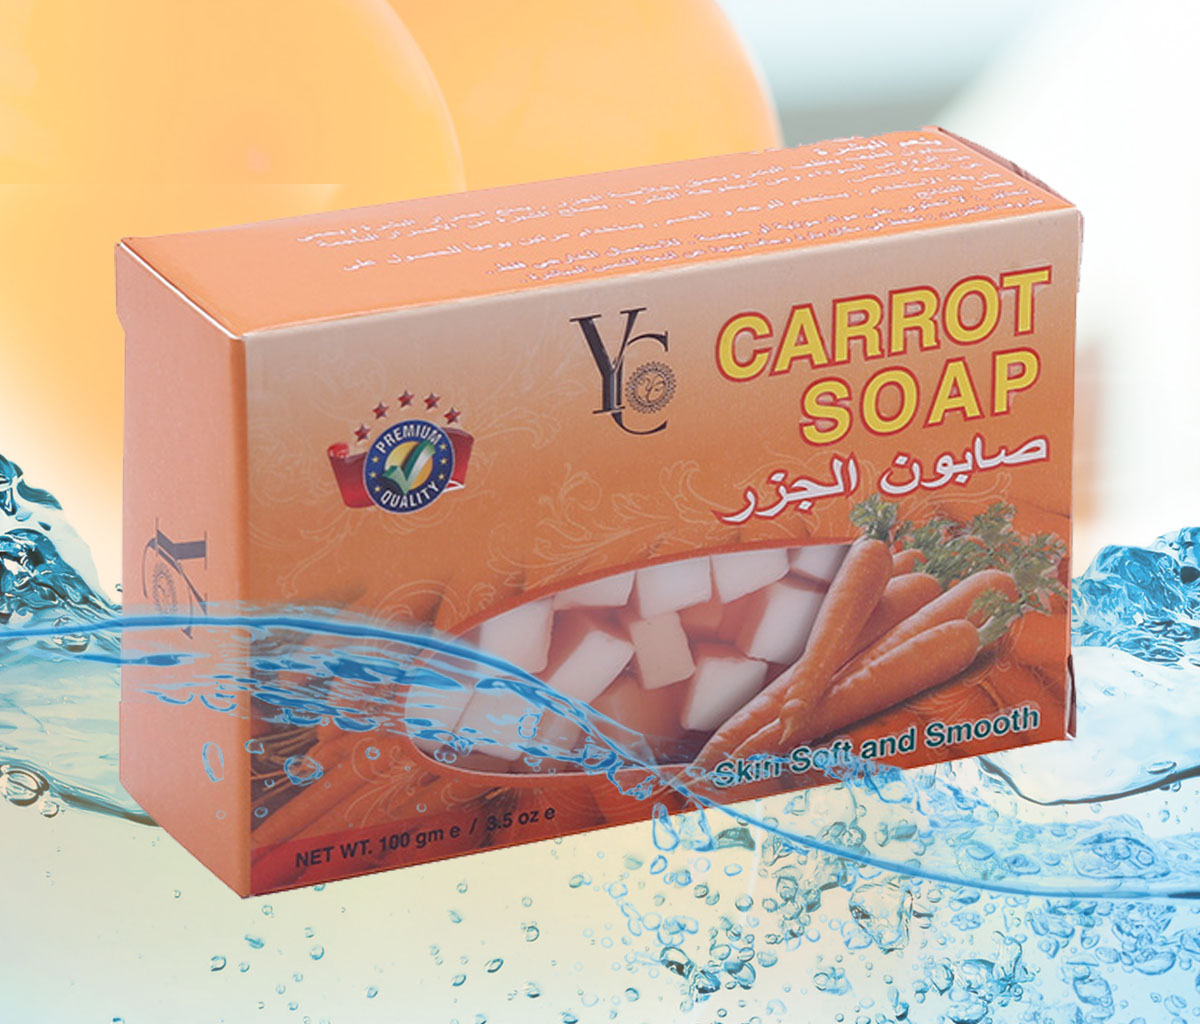 YC CARROT SOAP 100GM